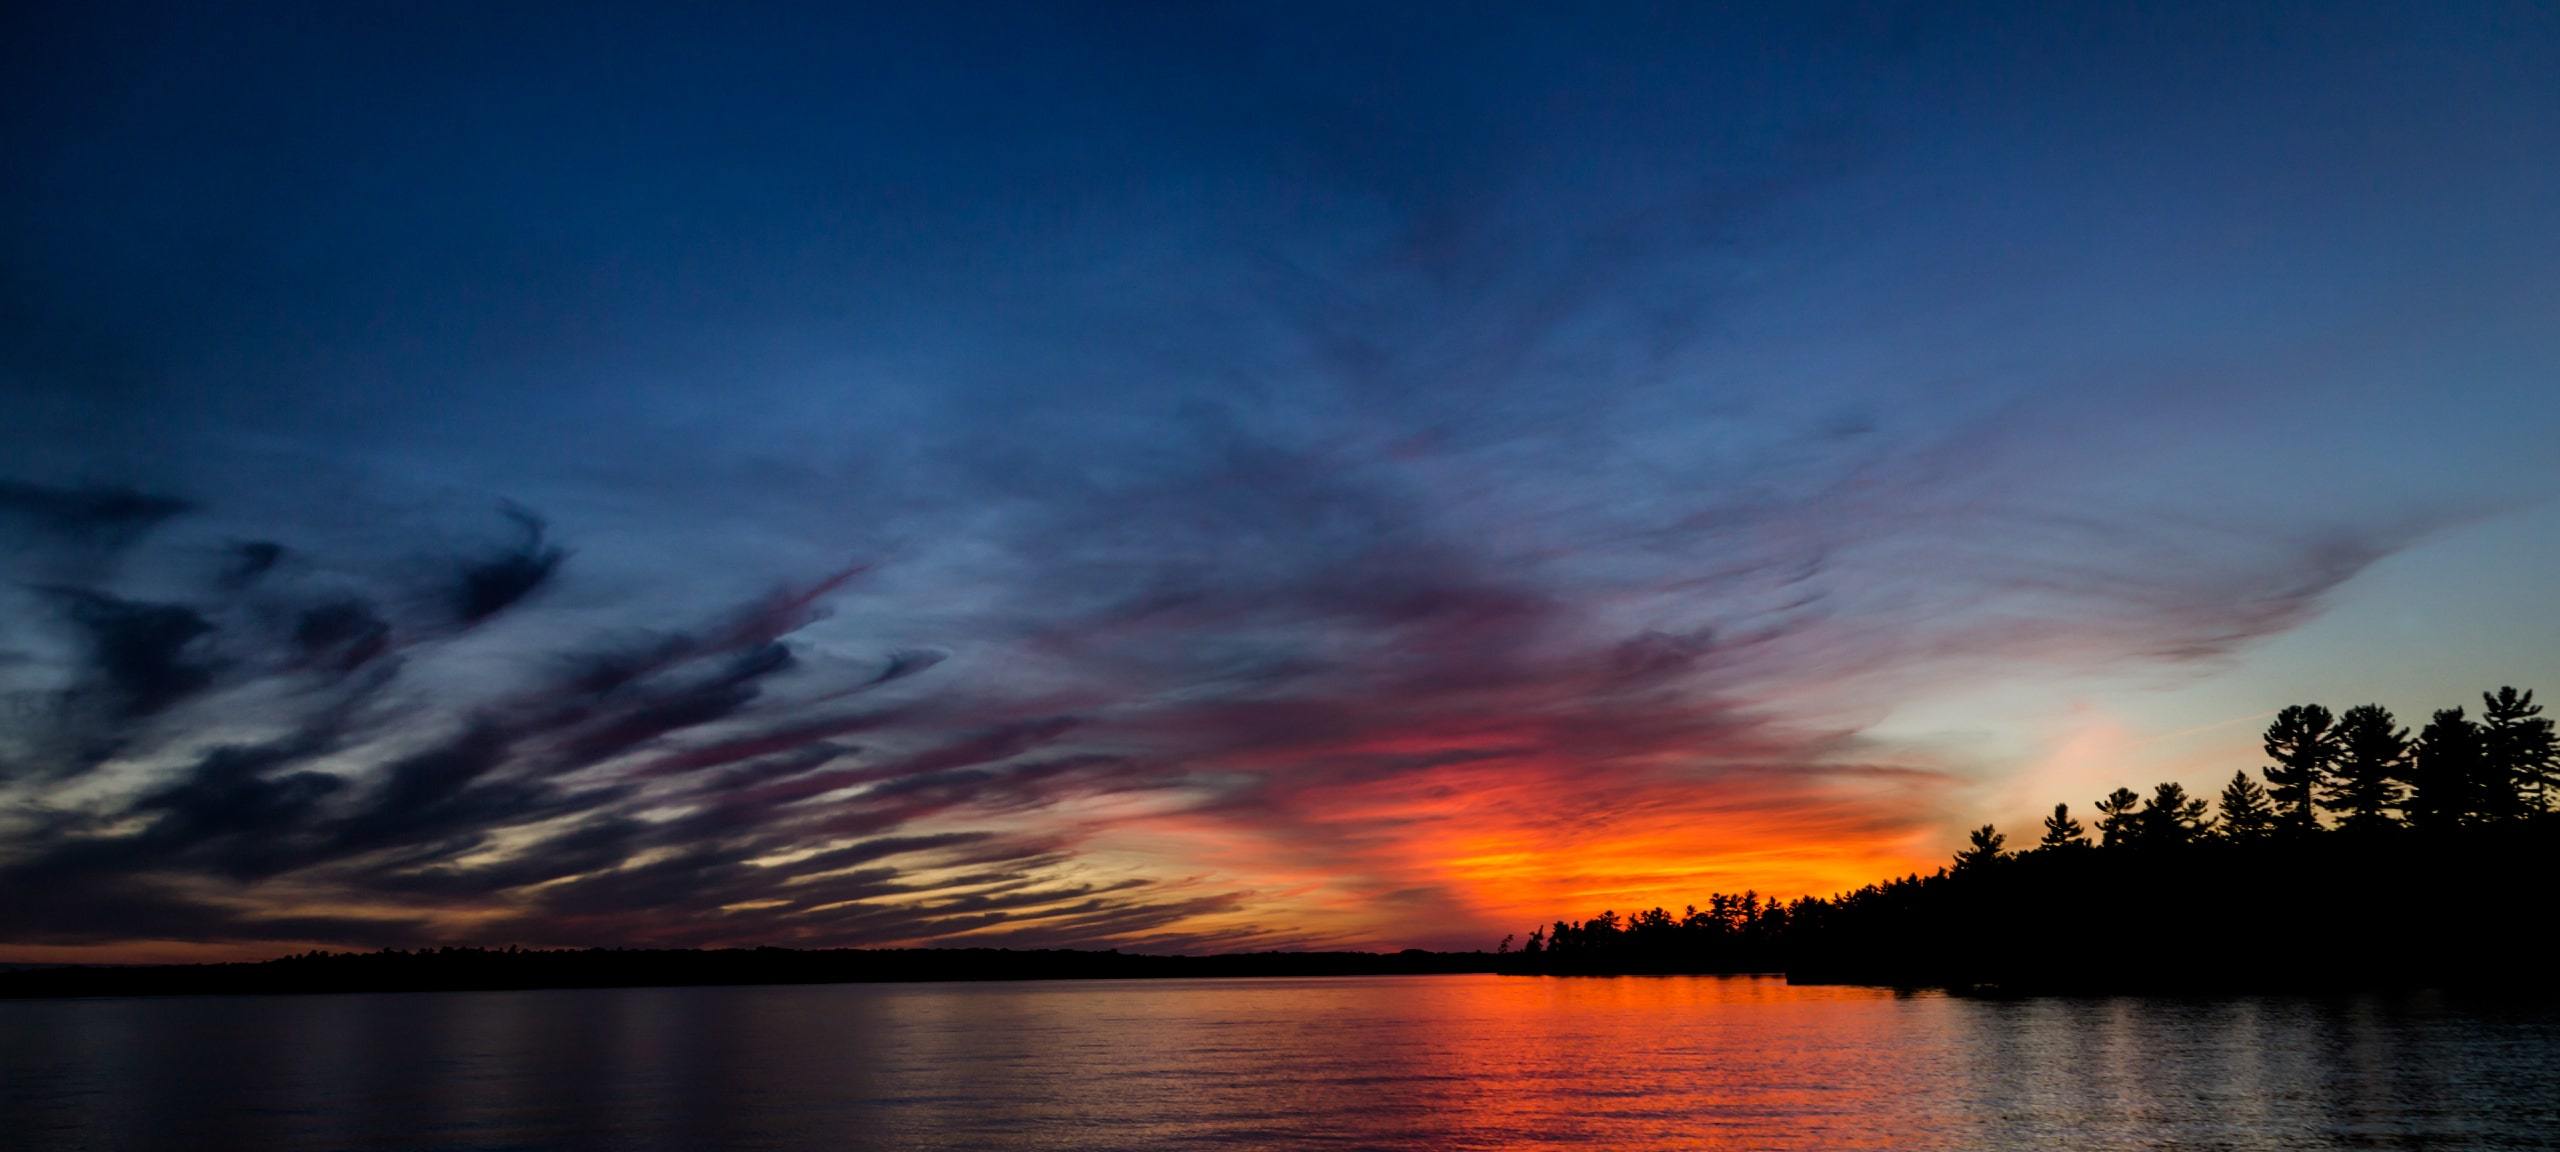 Blue and orange sunset over Lake Rosseau